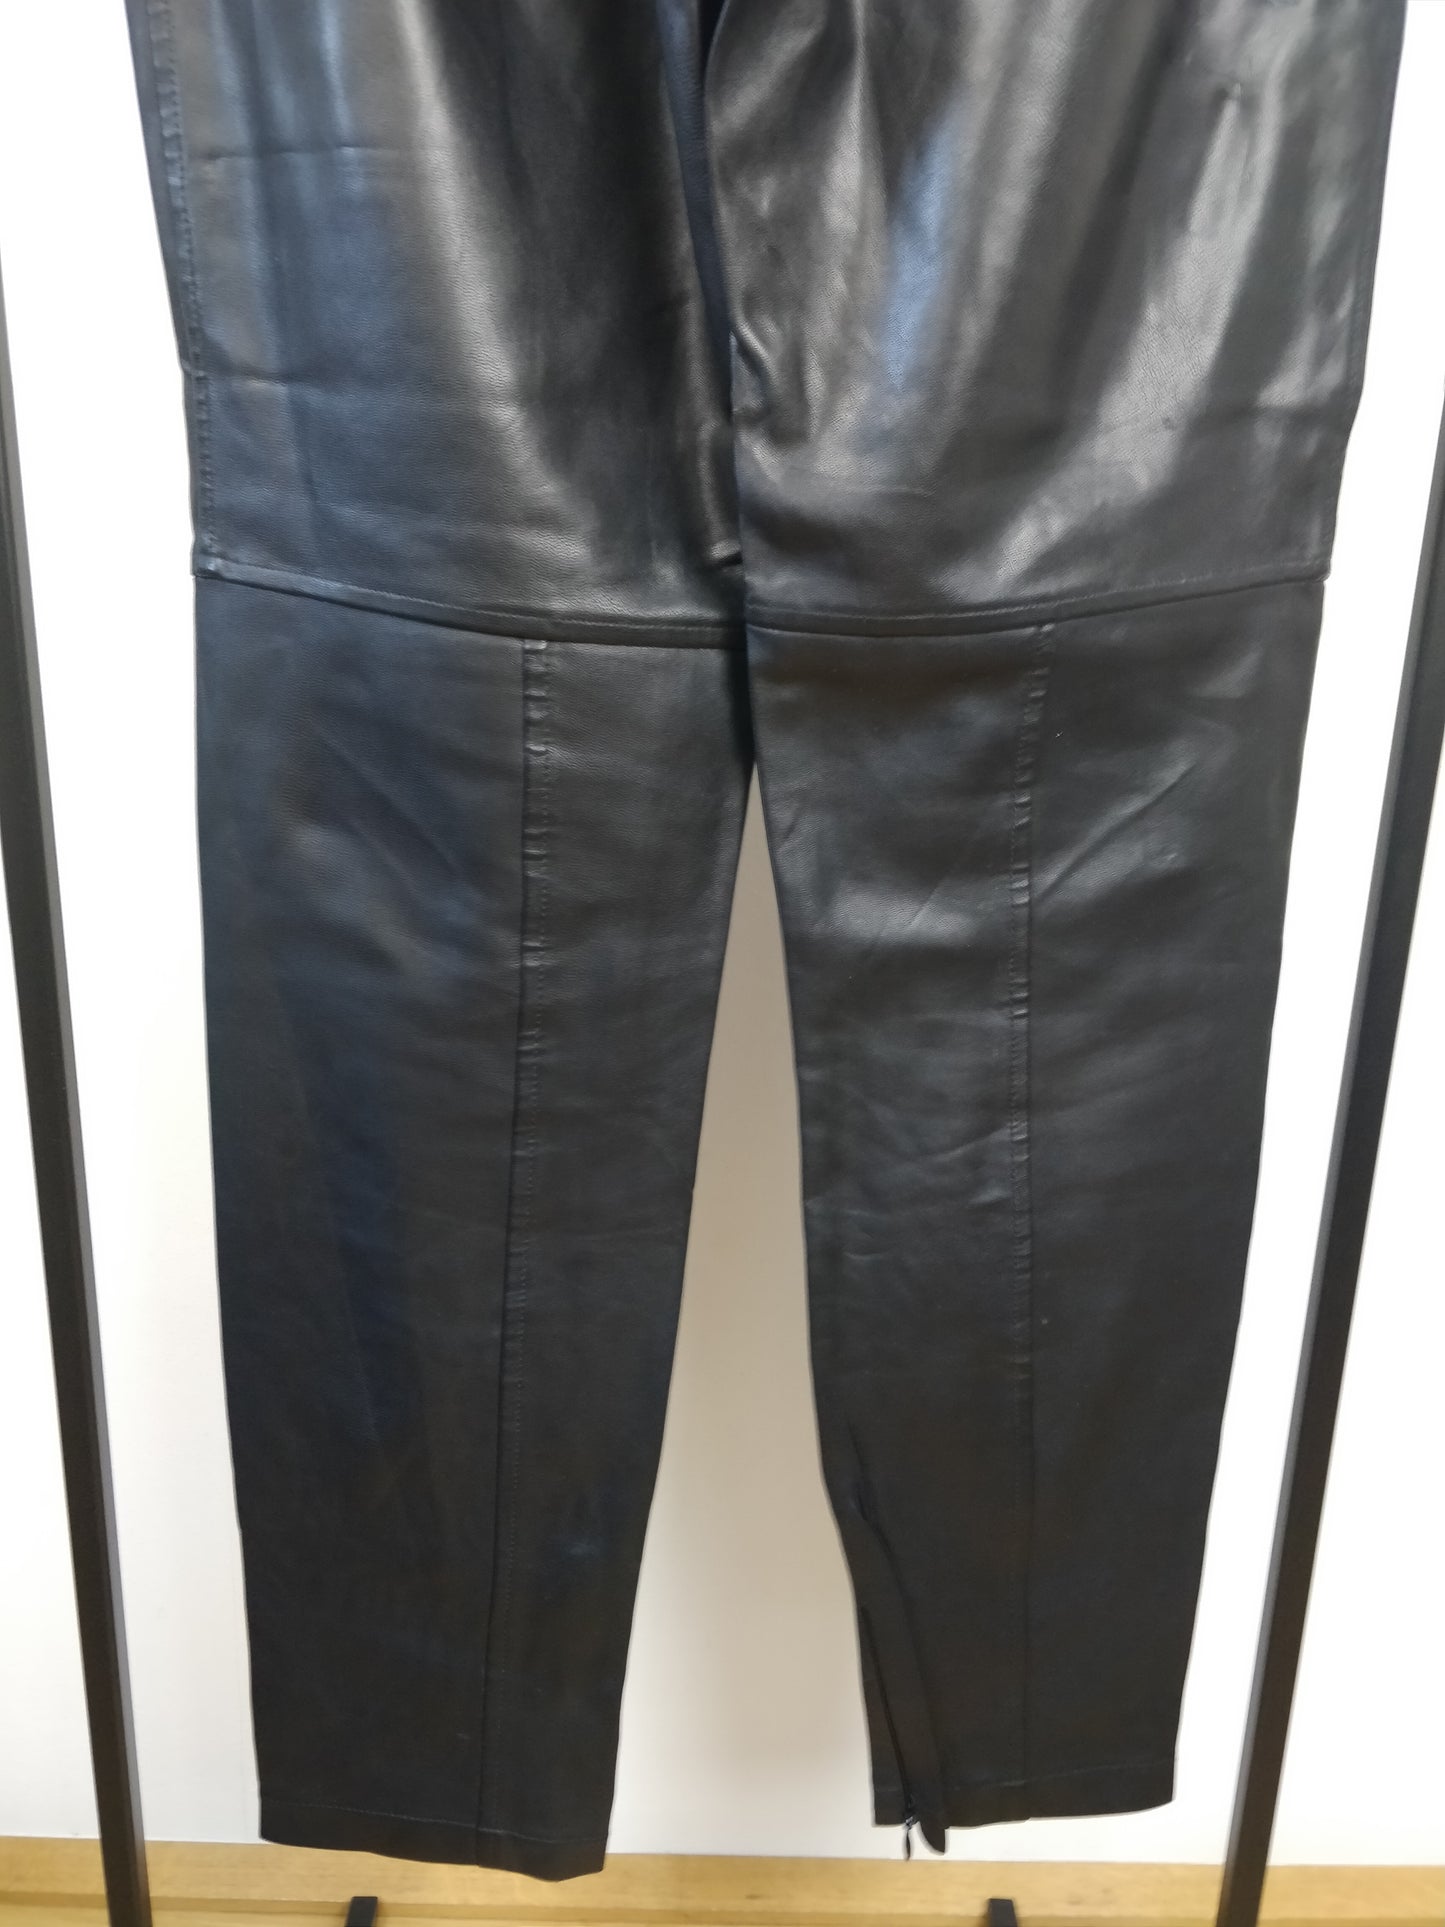 Black Leather Pant